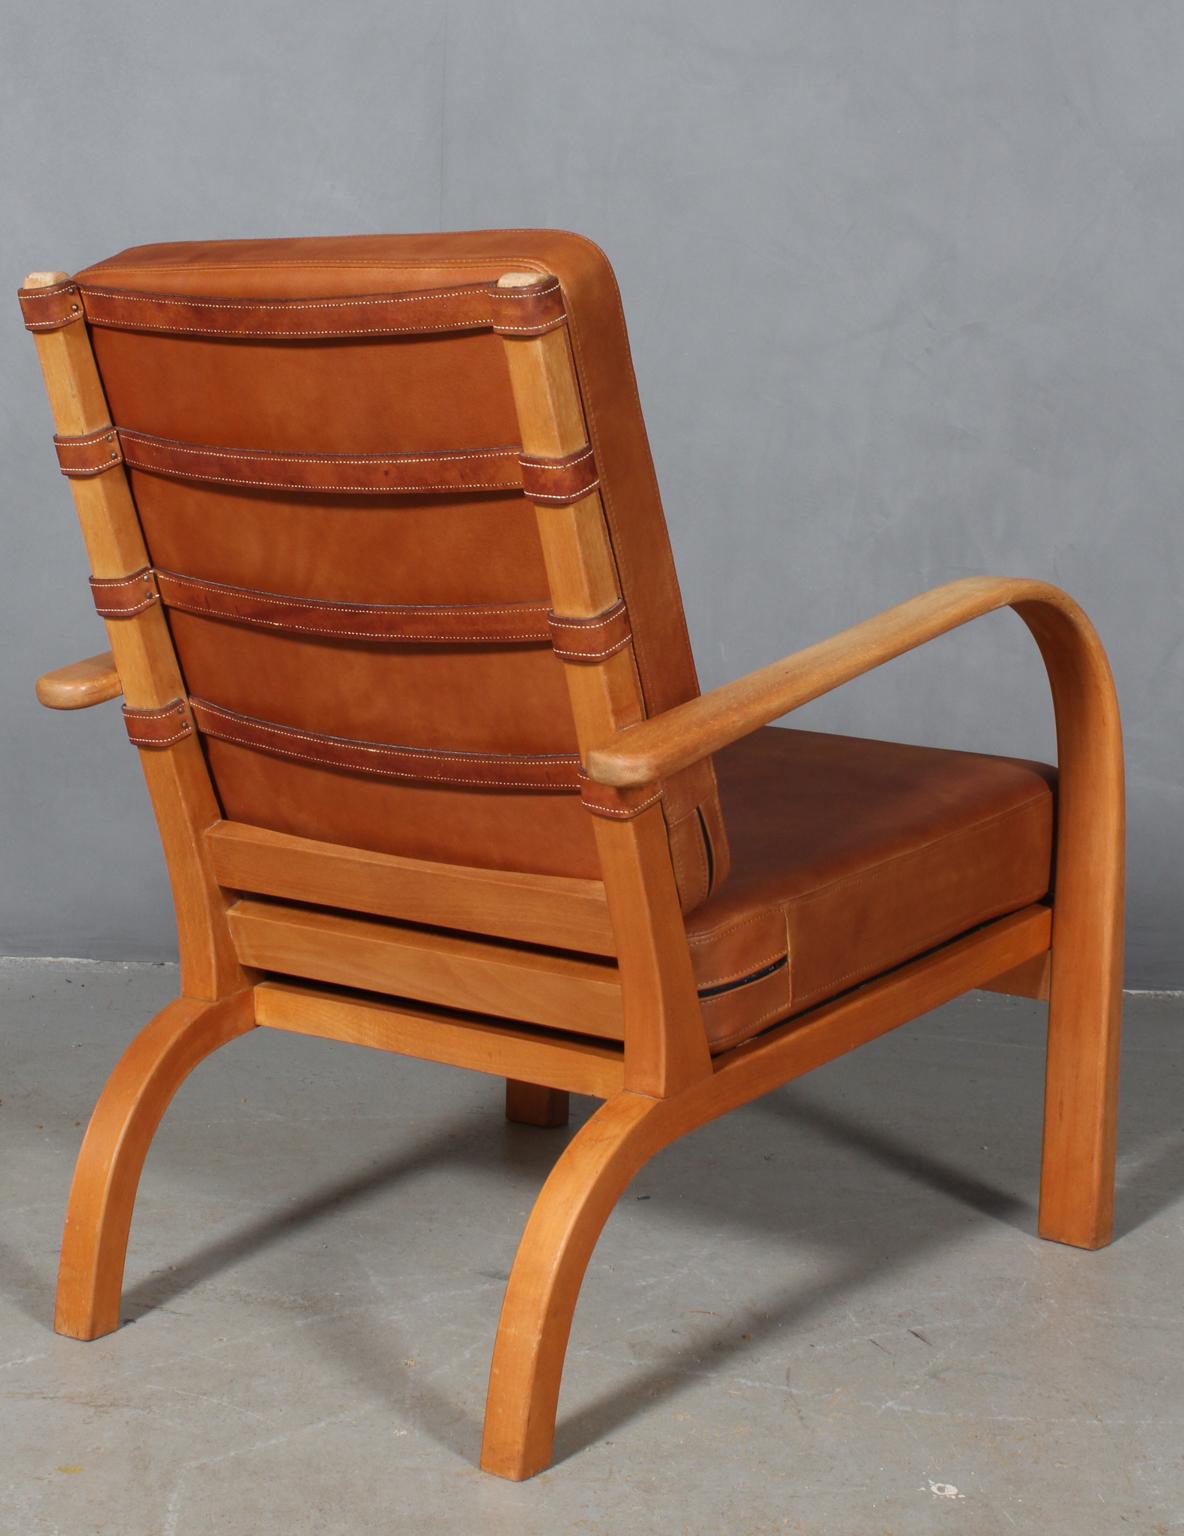 Leather Ernst Heilmann Sevaldsen for Fritz Hansen Rare Lounge Chair from the 1930s